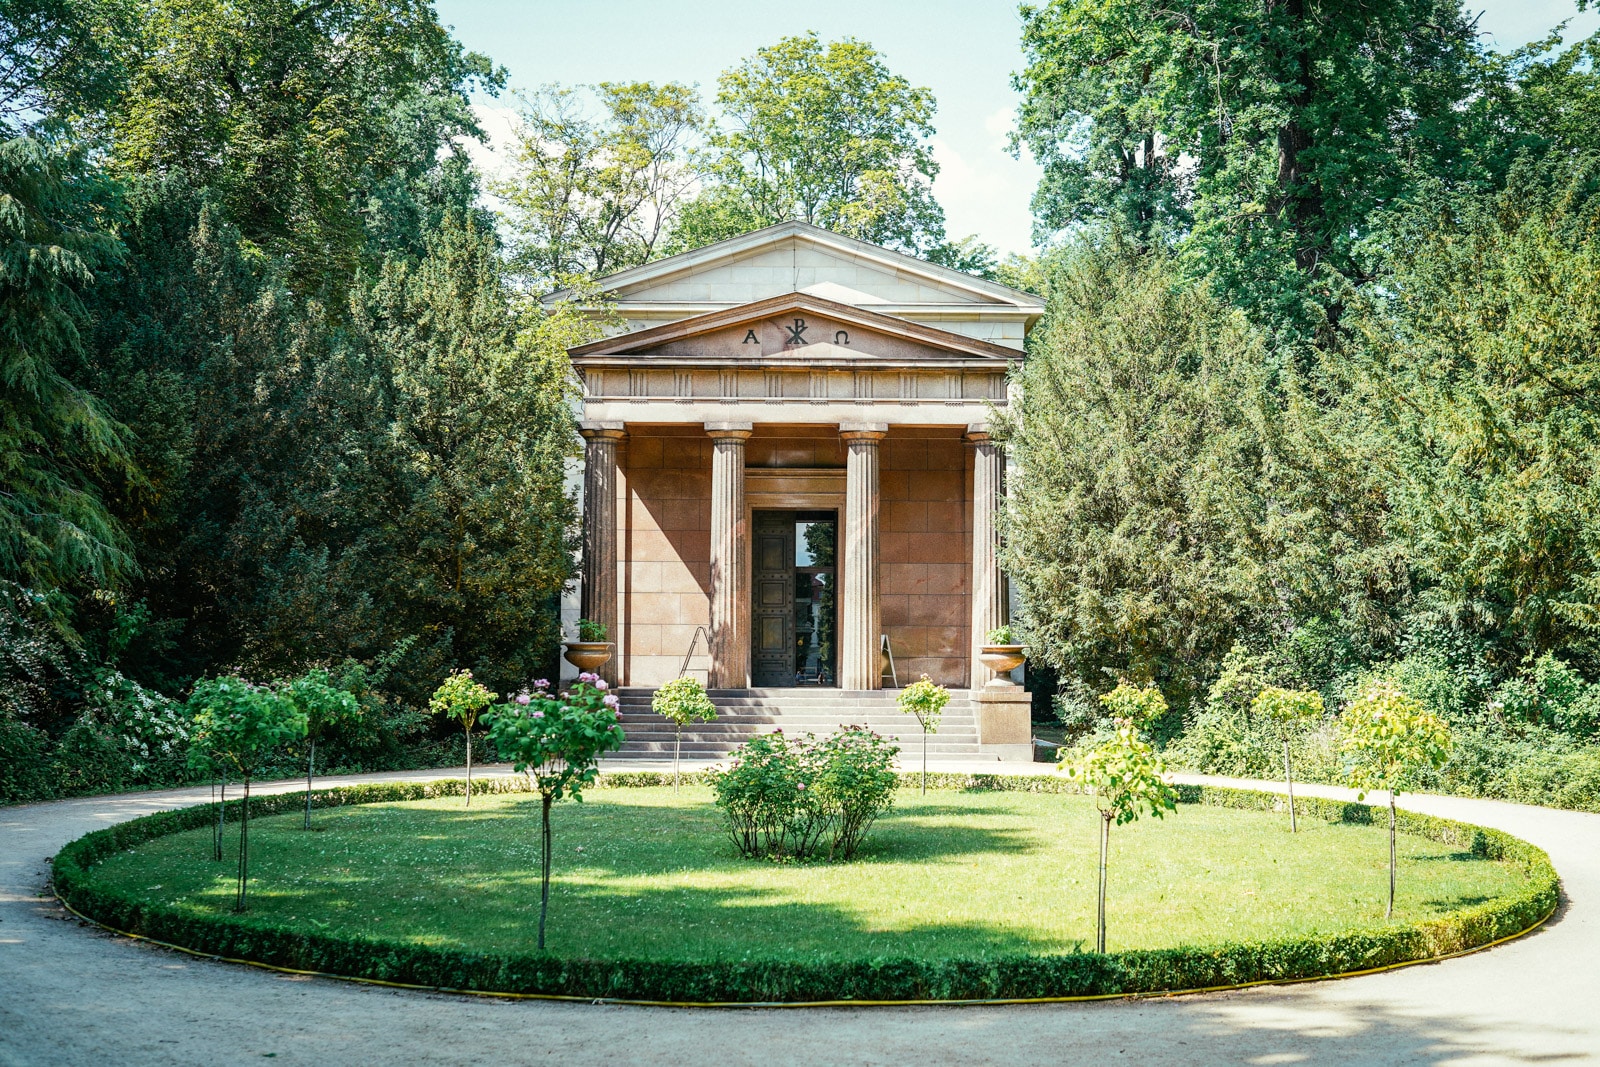 The Mausoleum at Schloss Charlottenburg